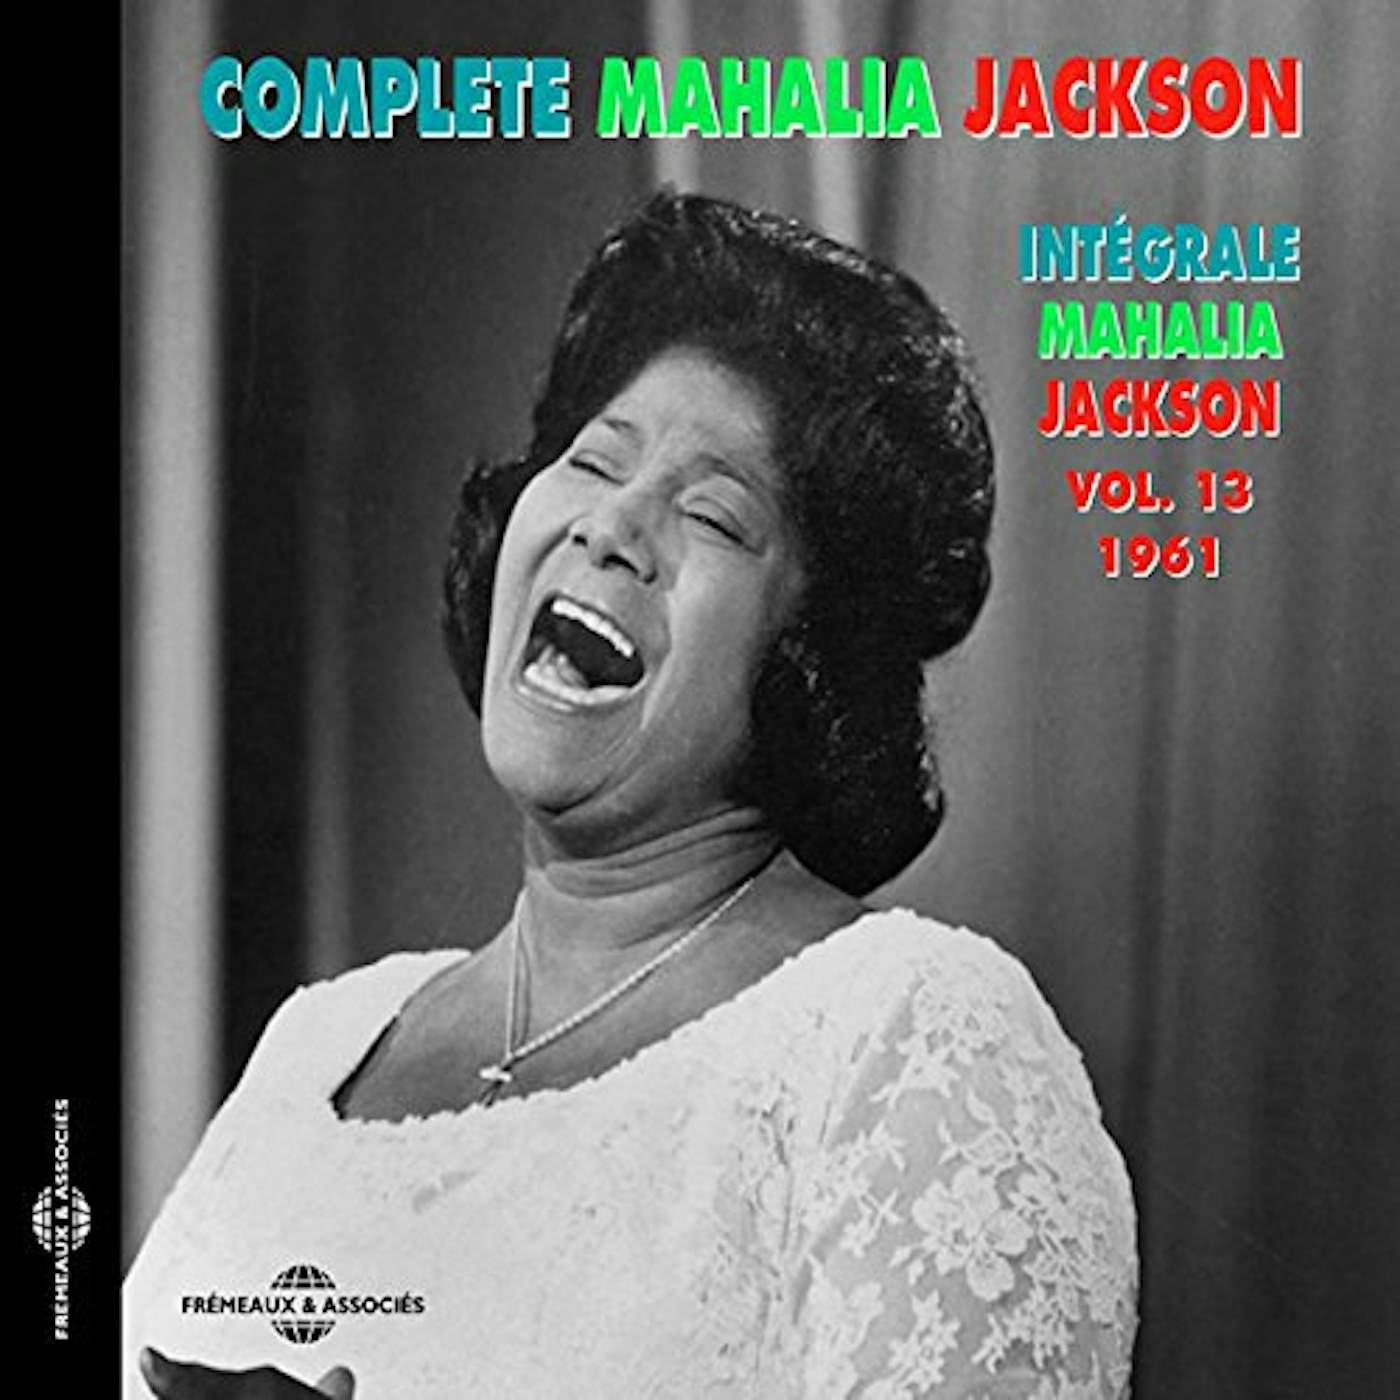 Mahalia Jackson INTEGRALE VOLUME 13-1961 CD